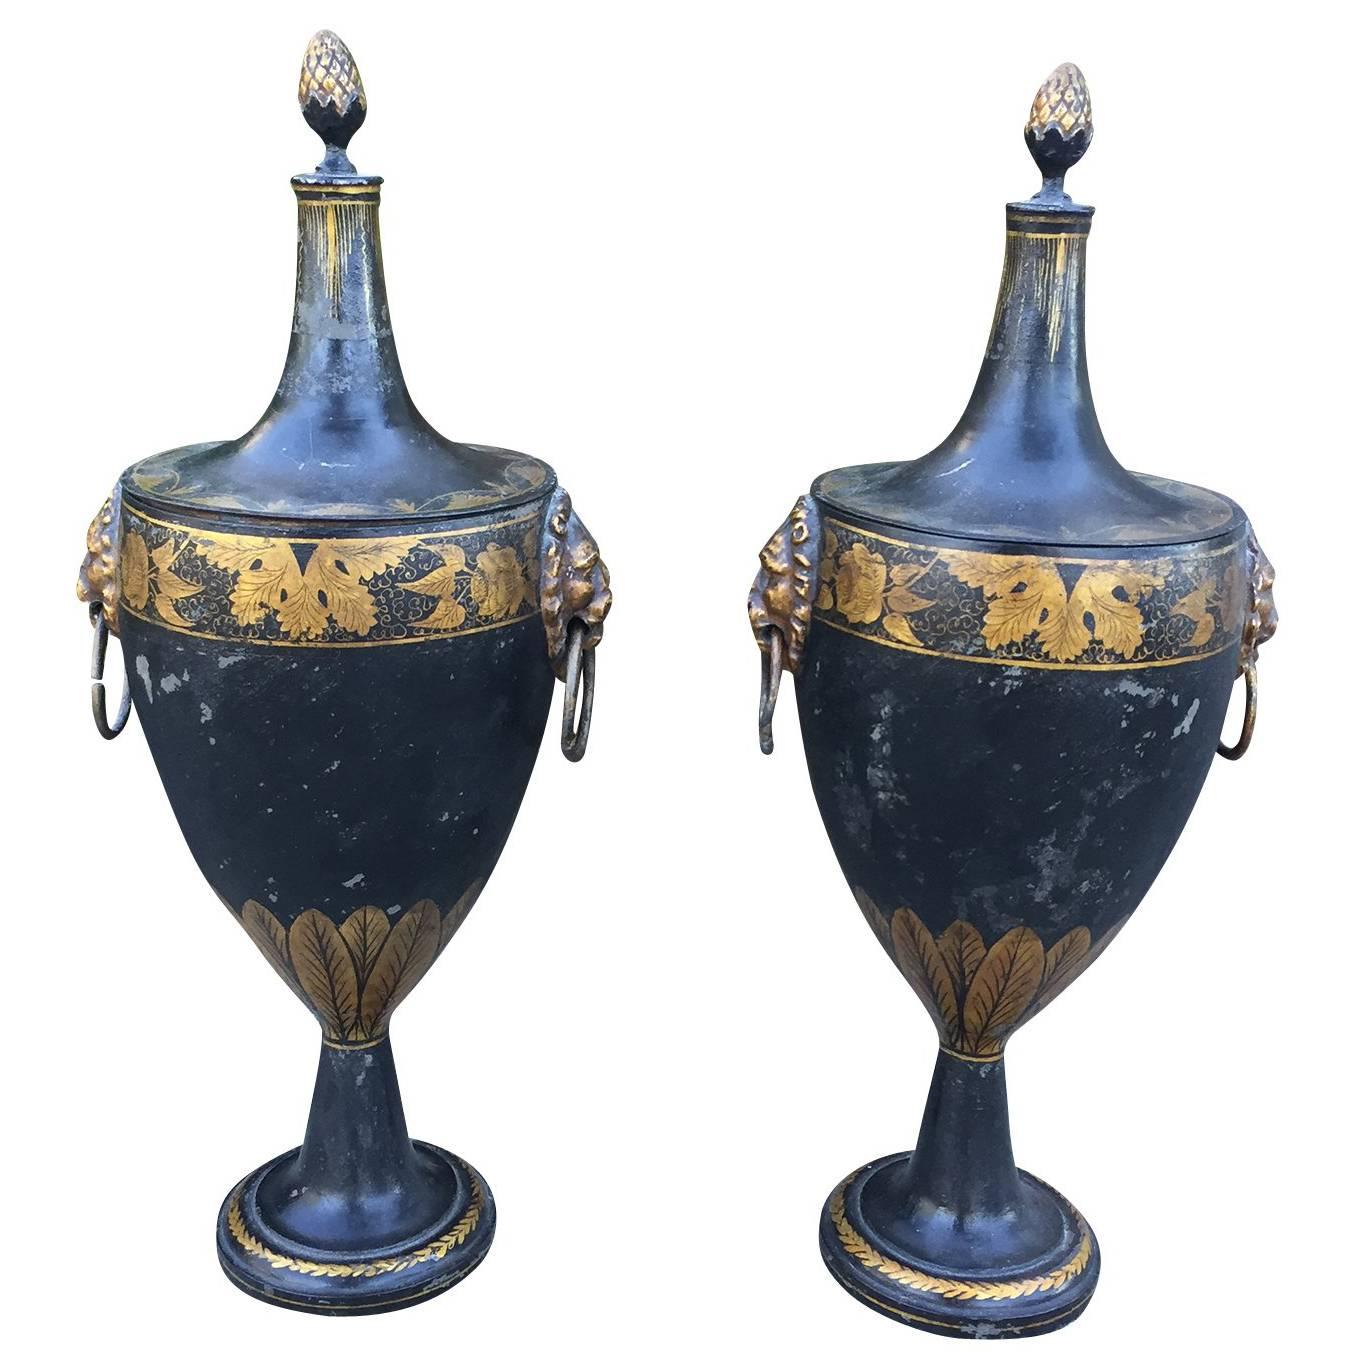 Pair of Tall English Regency Tole Chestnut Urns, circa 1800-1820